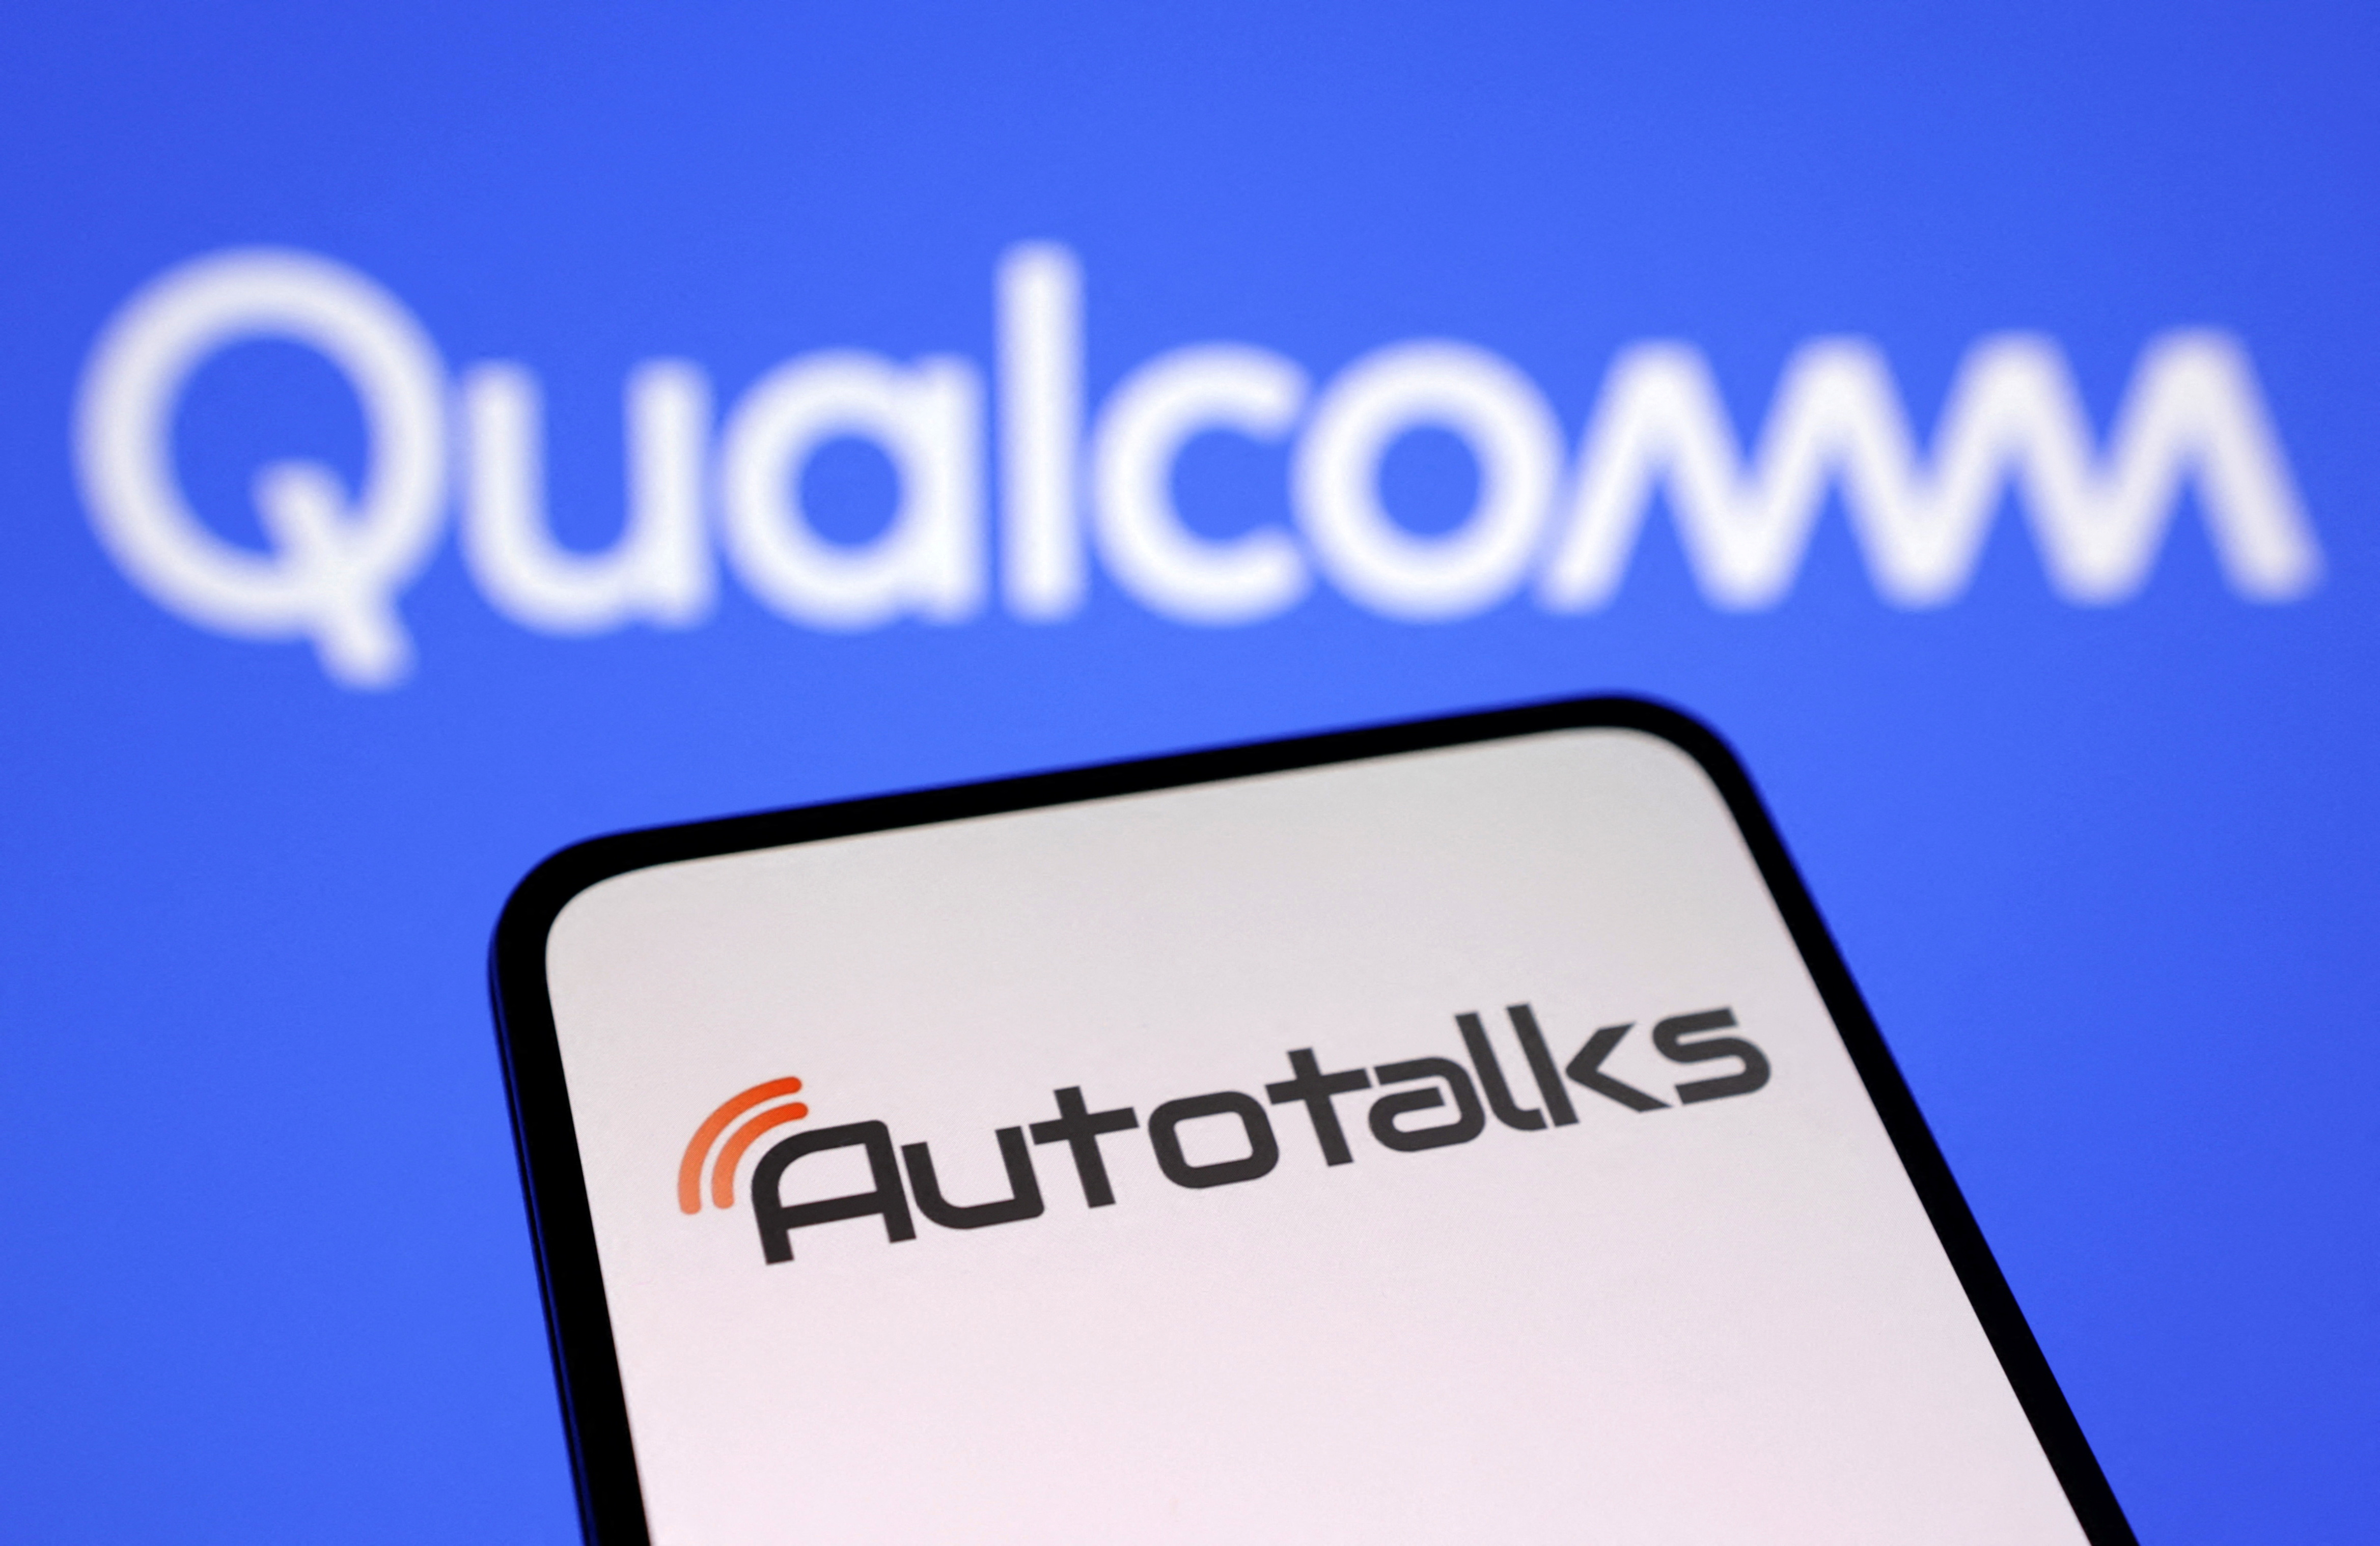 Illustration shows Autotalks and Qualcomm logos